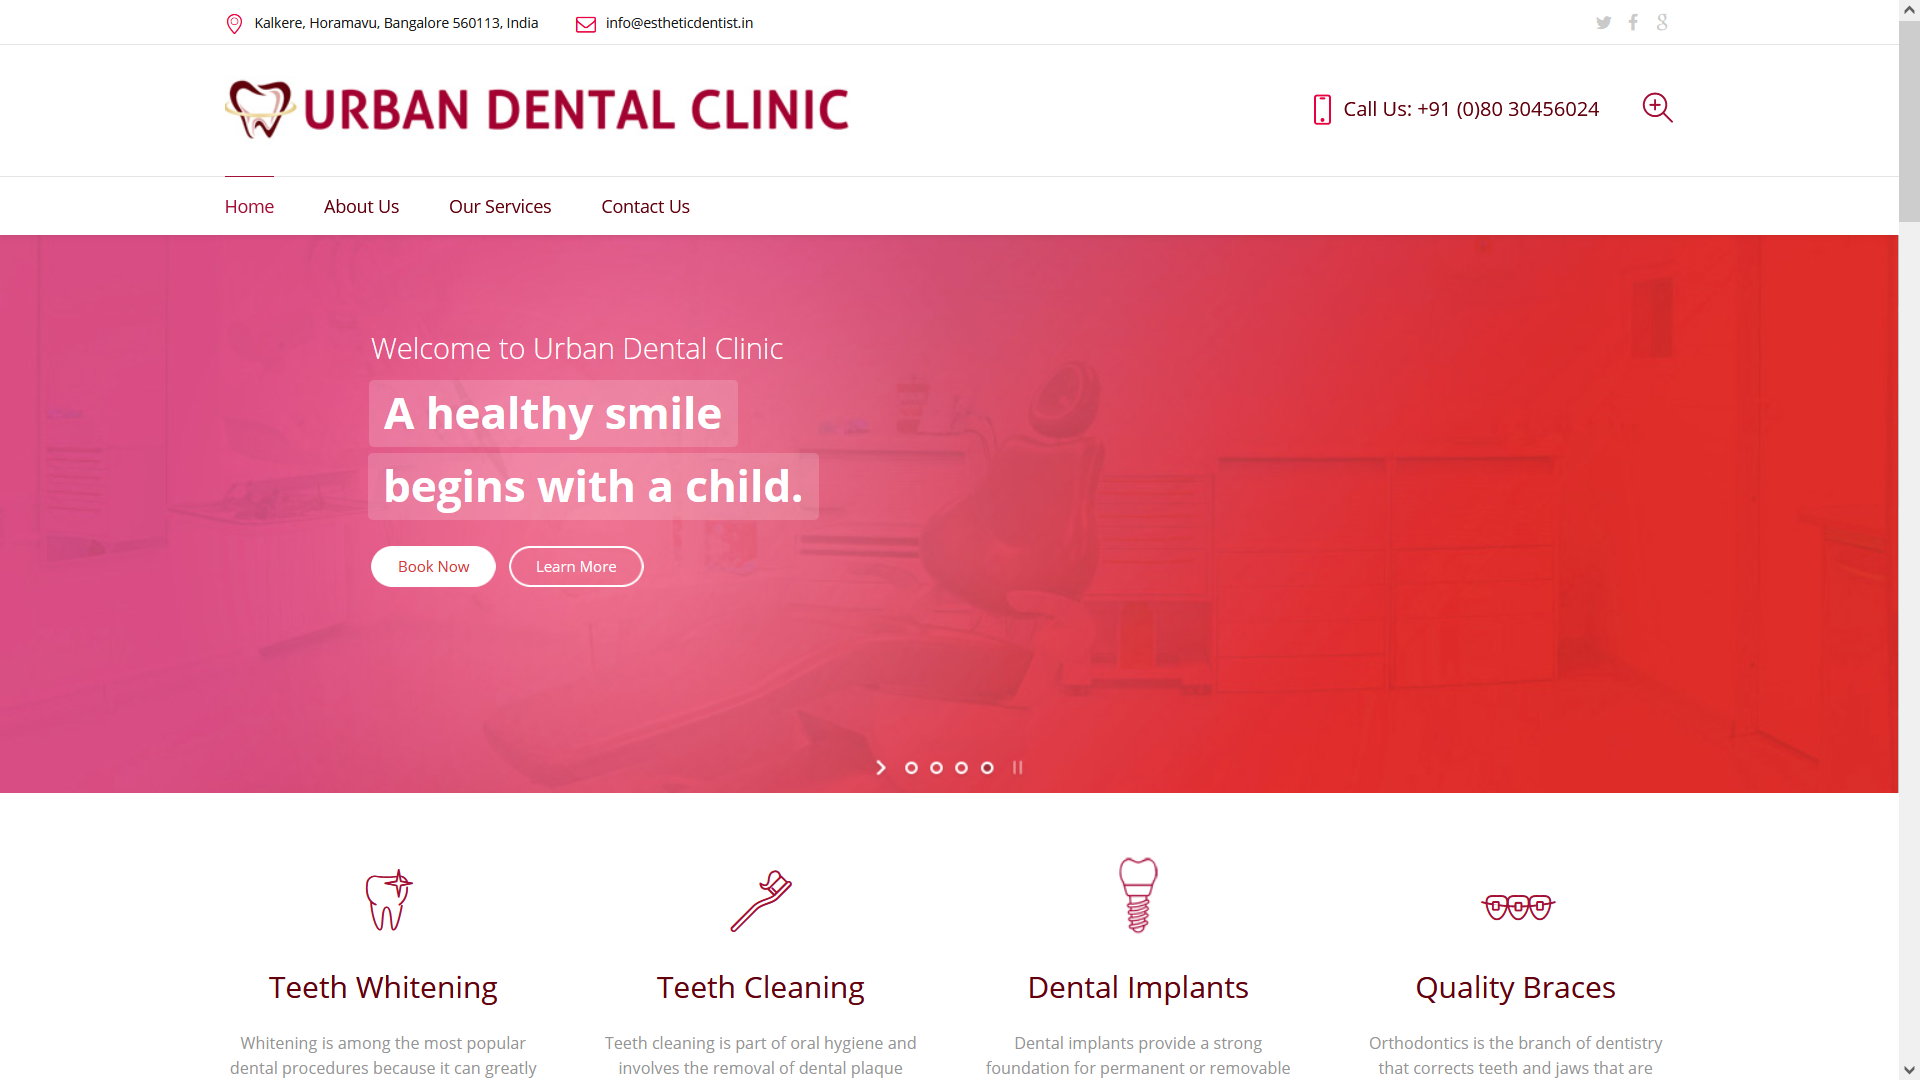 homepage of Urban Dental Clinic website